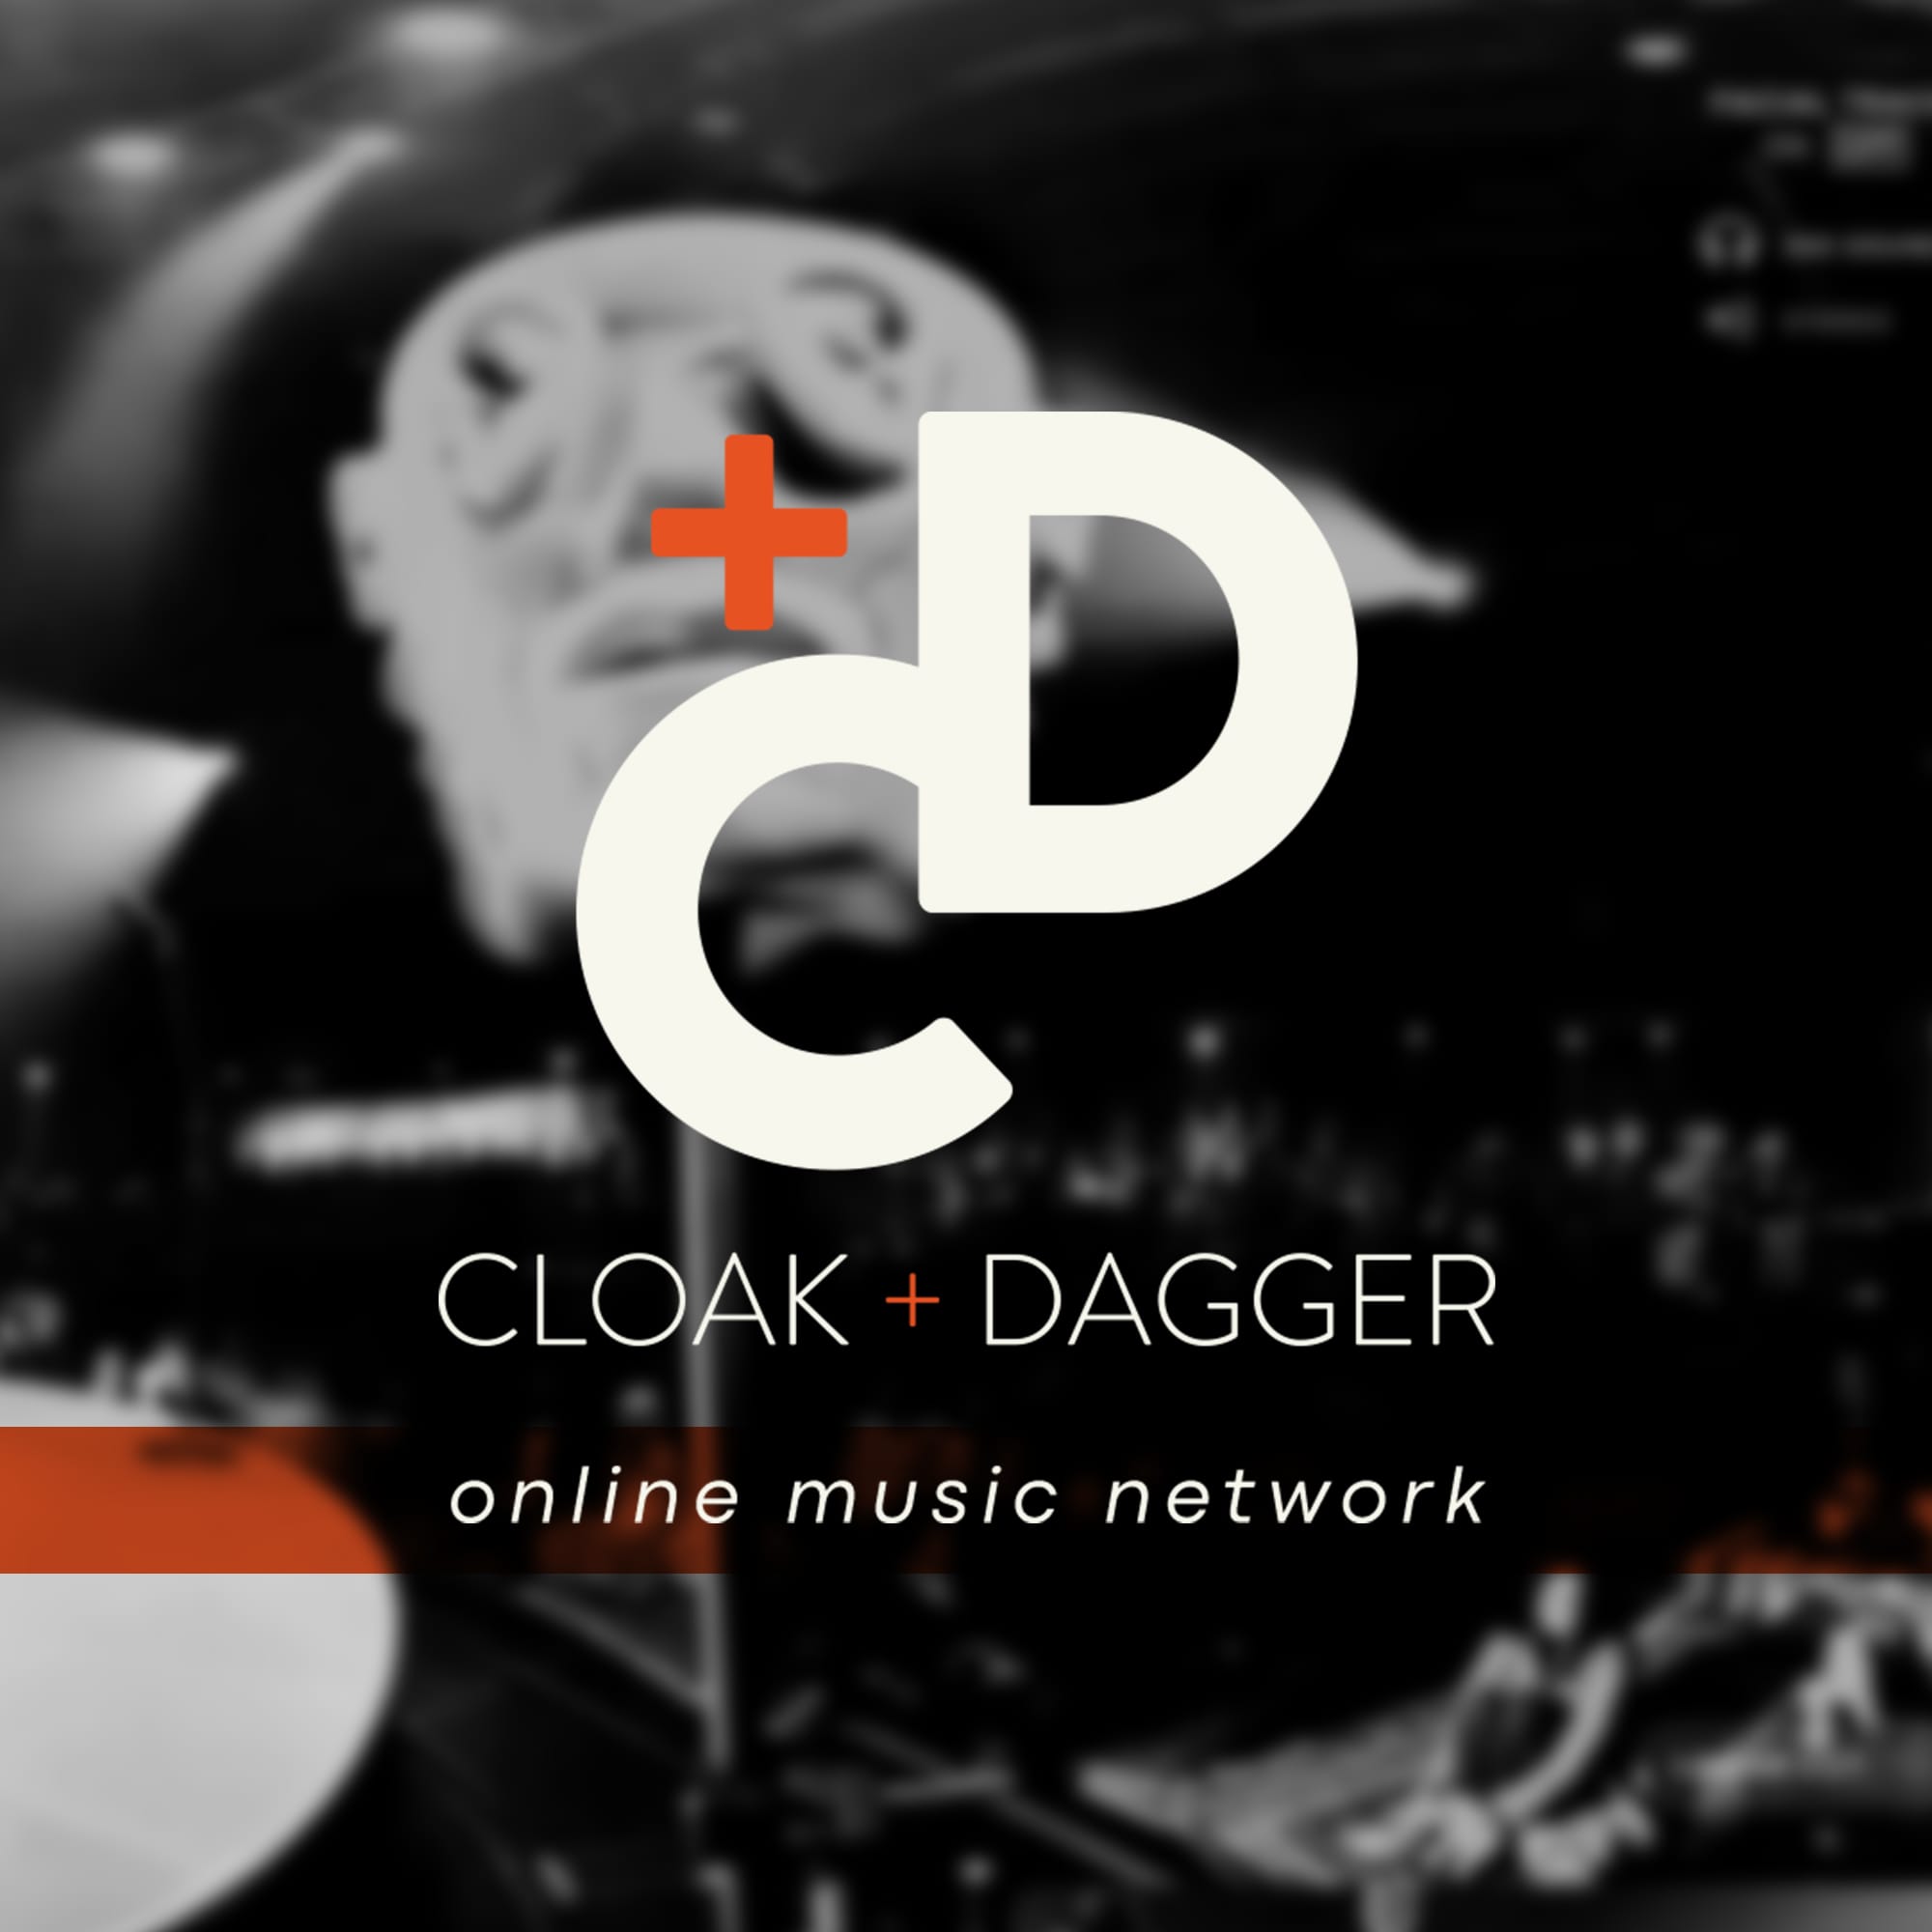 Cloak + Dagger Network